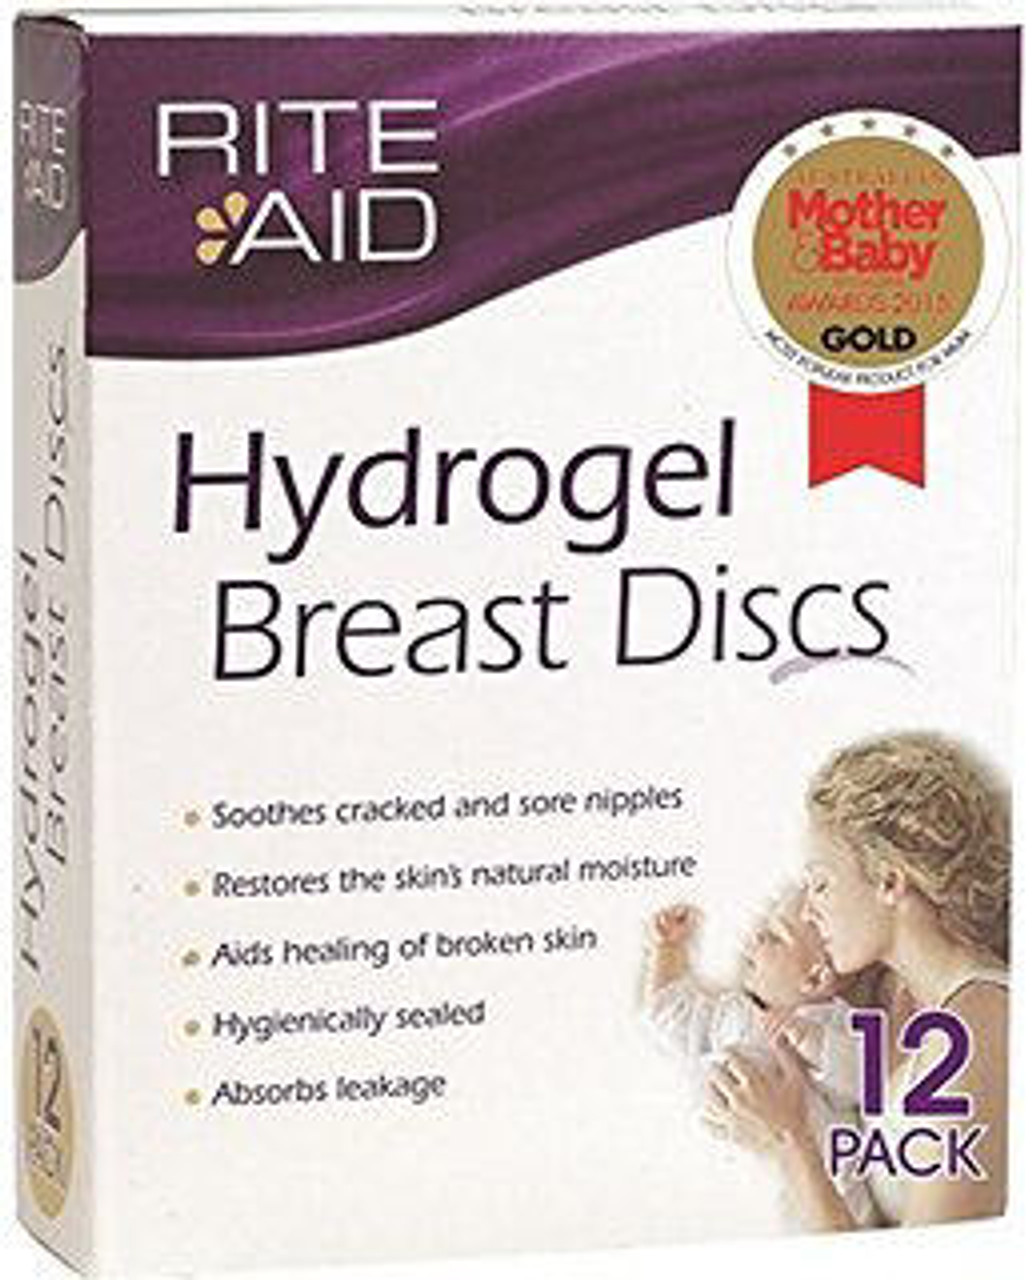 Rite Aid Hydrogel Products: A Breastfeeding Must-Have • Mummy